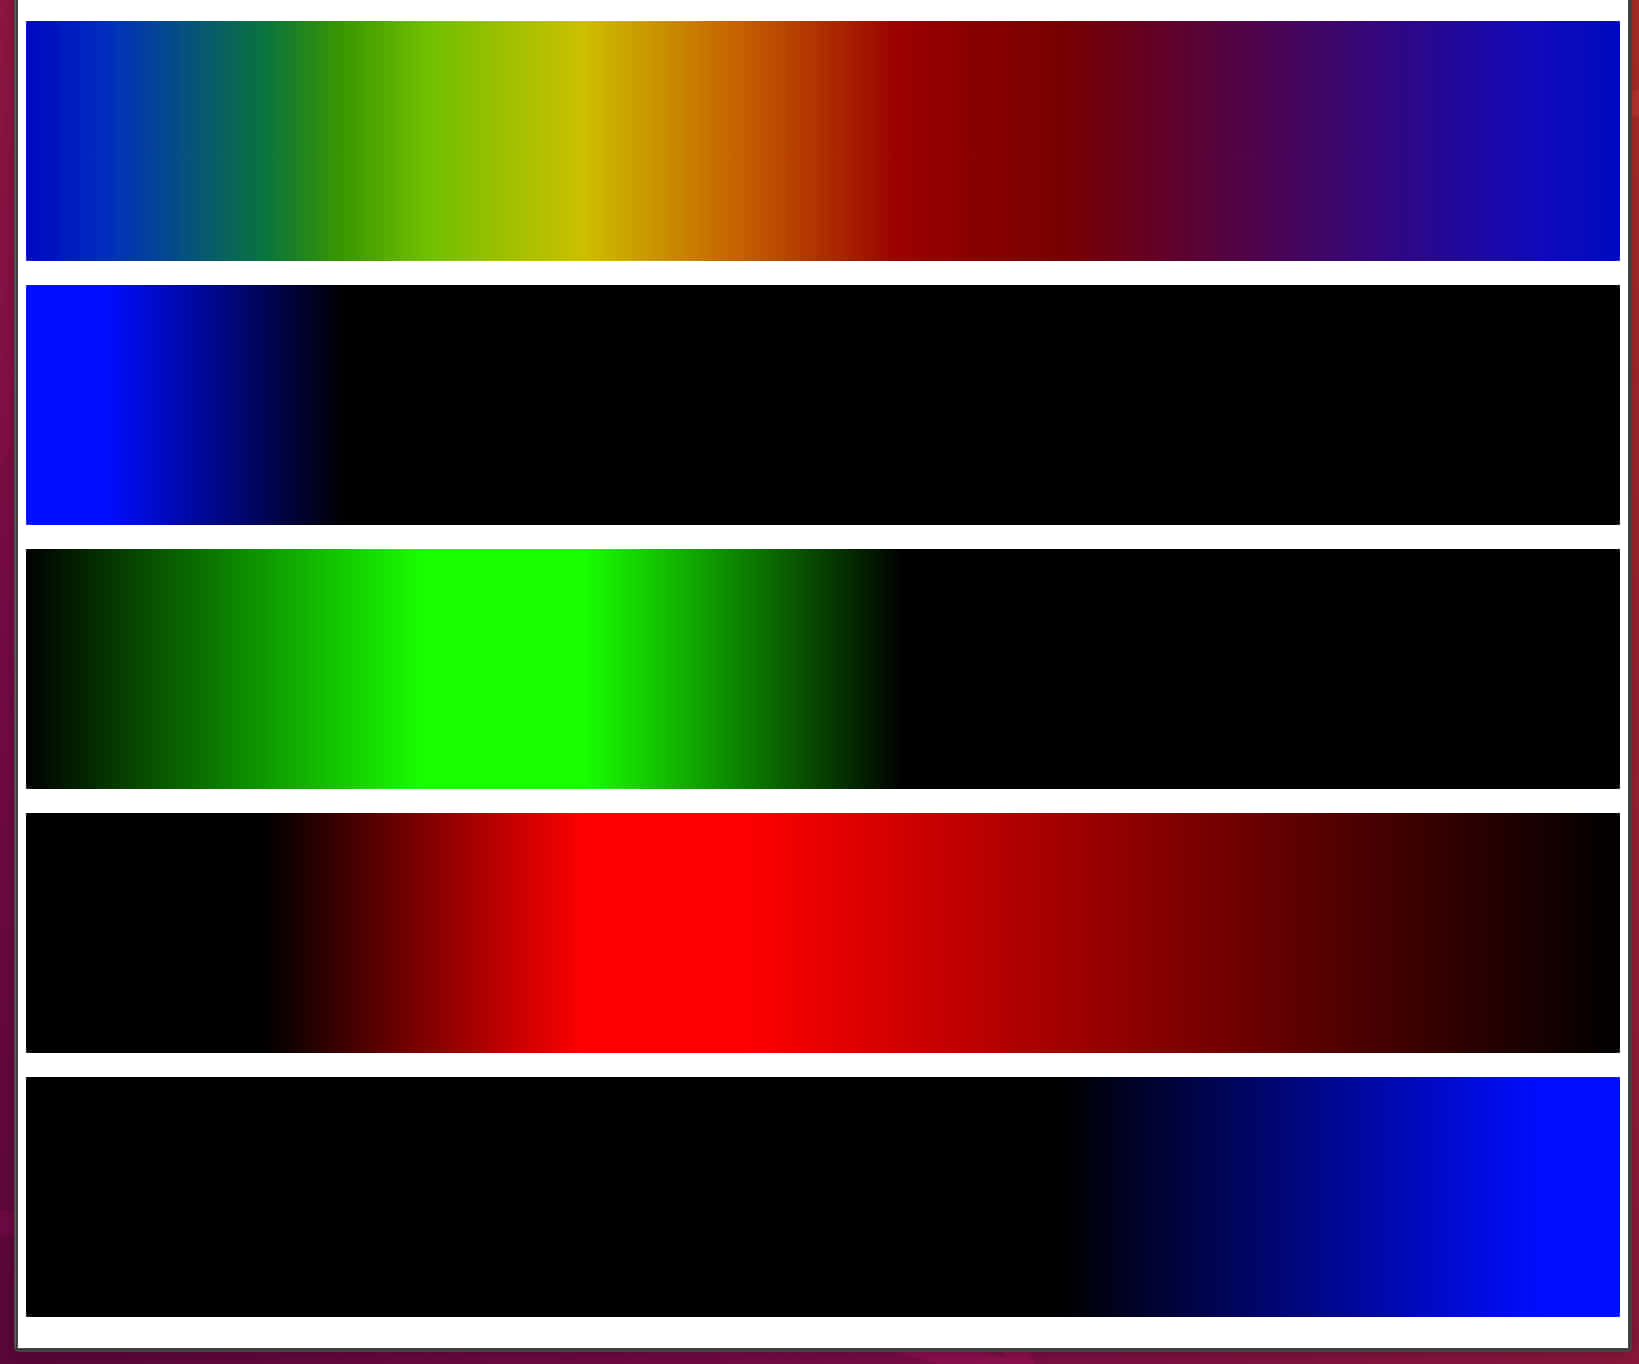 Sfondocomputer Vivace Con Colore Arcobaleno Sfumato.